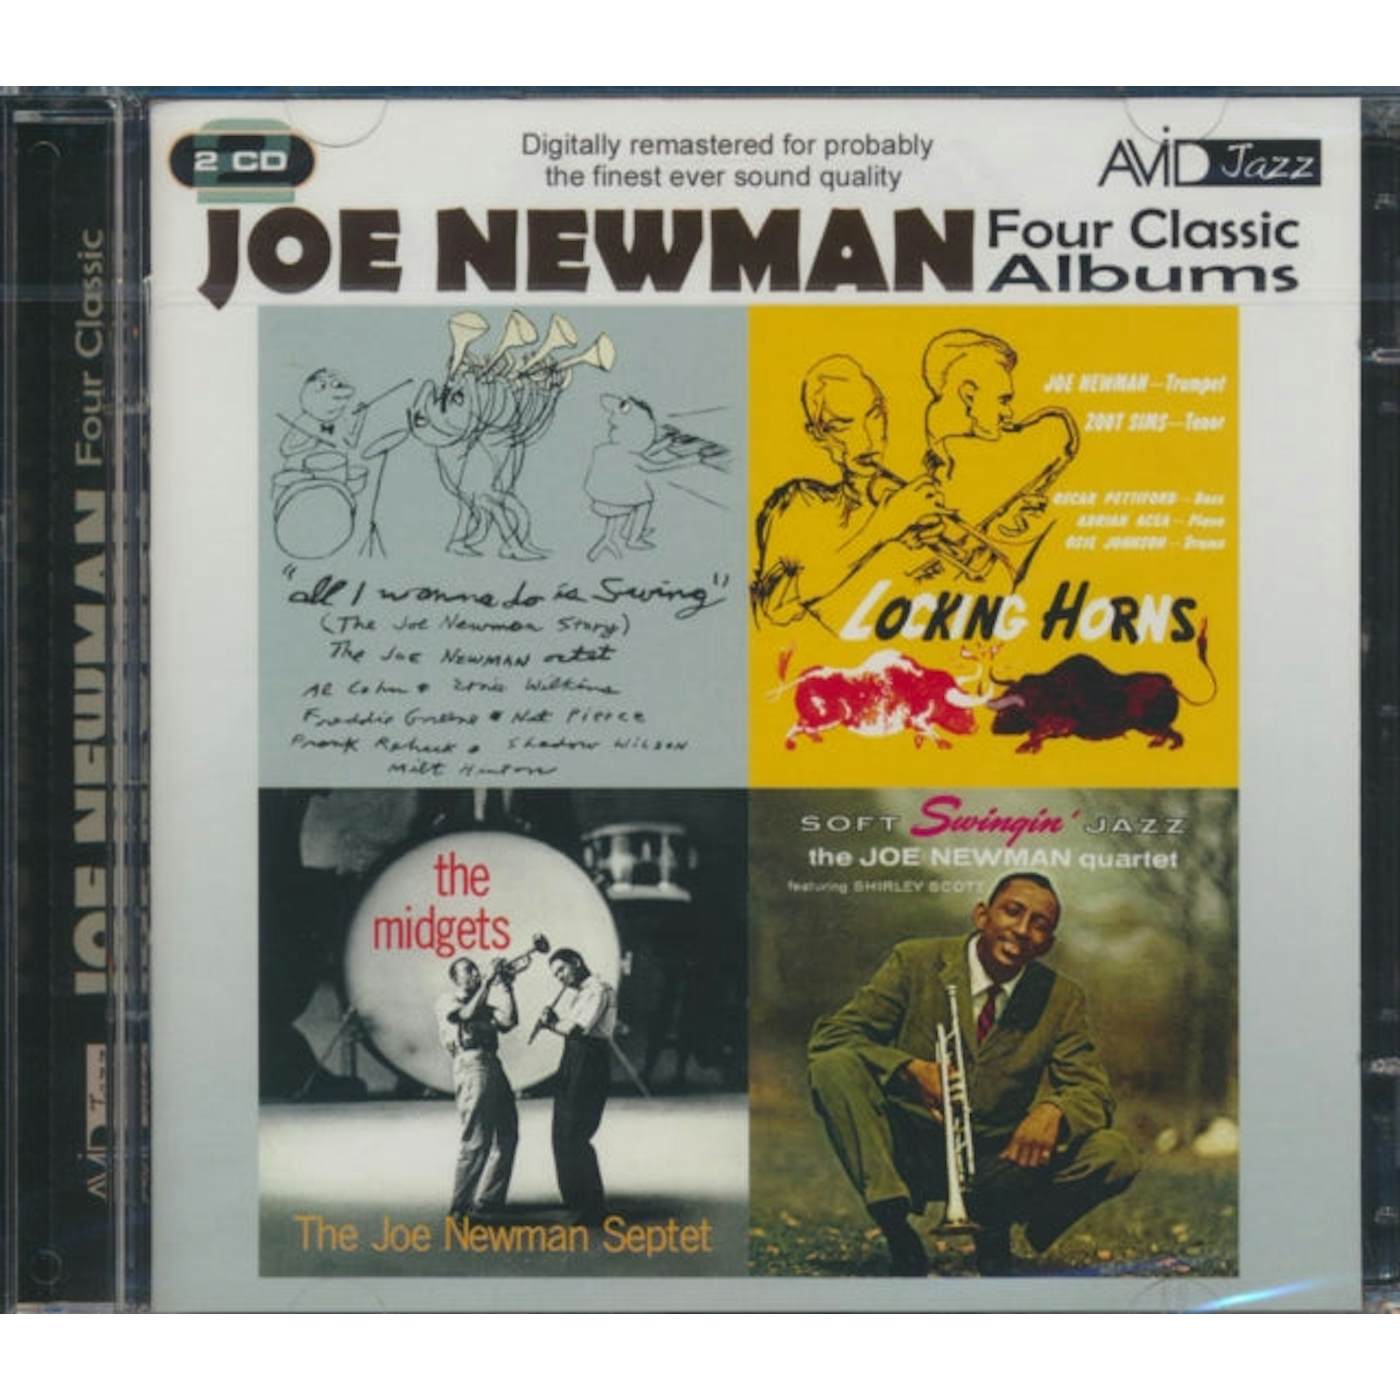 Joe Newman CD - Four Classic Albums (Locking Horns / All I Wanna Do Is Swing / The Midgets / Soft Swingin' Jazz)